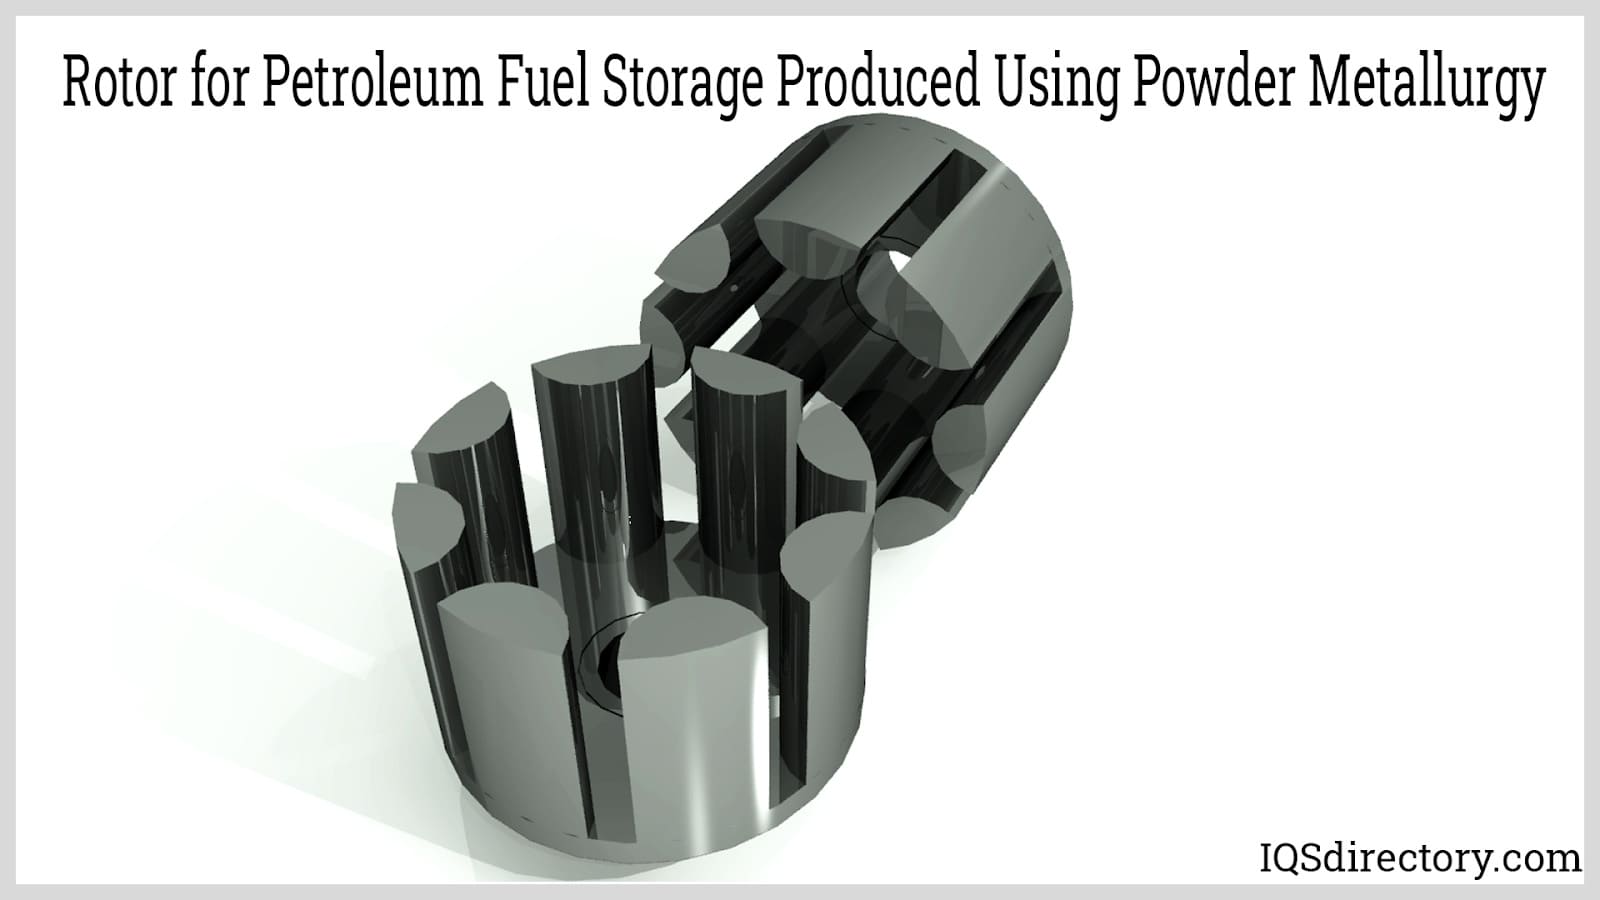 Rotor for Petroleum Fuel Storage Produced Using Powder Metallurgy